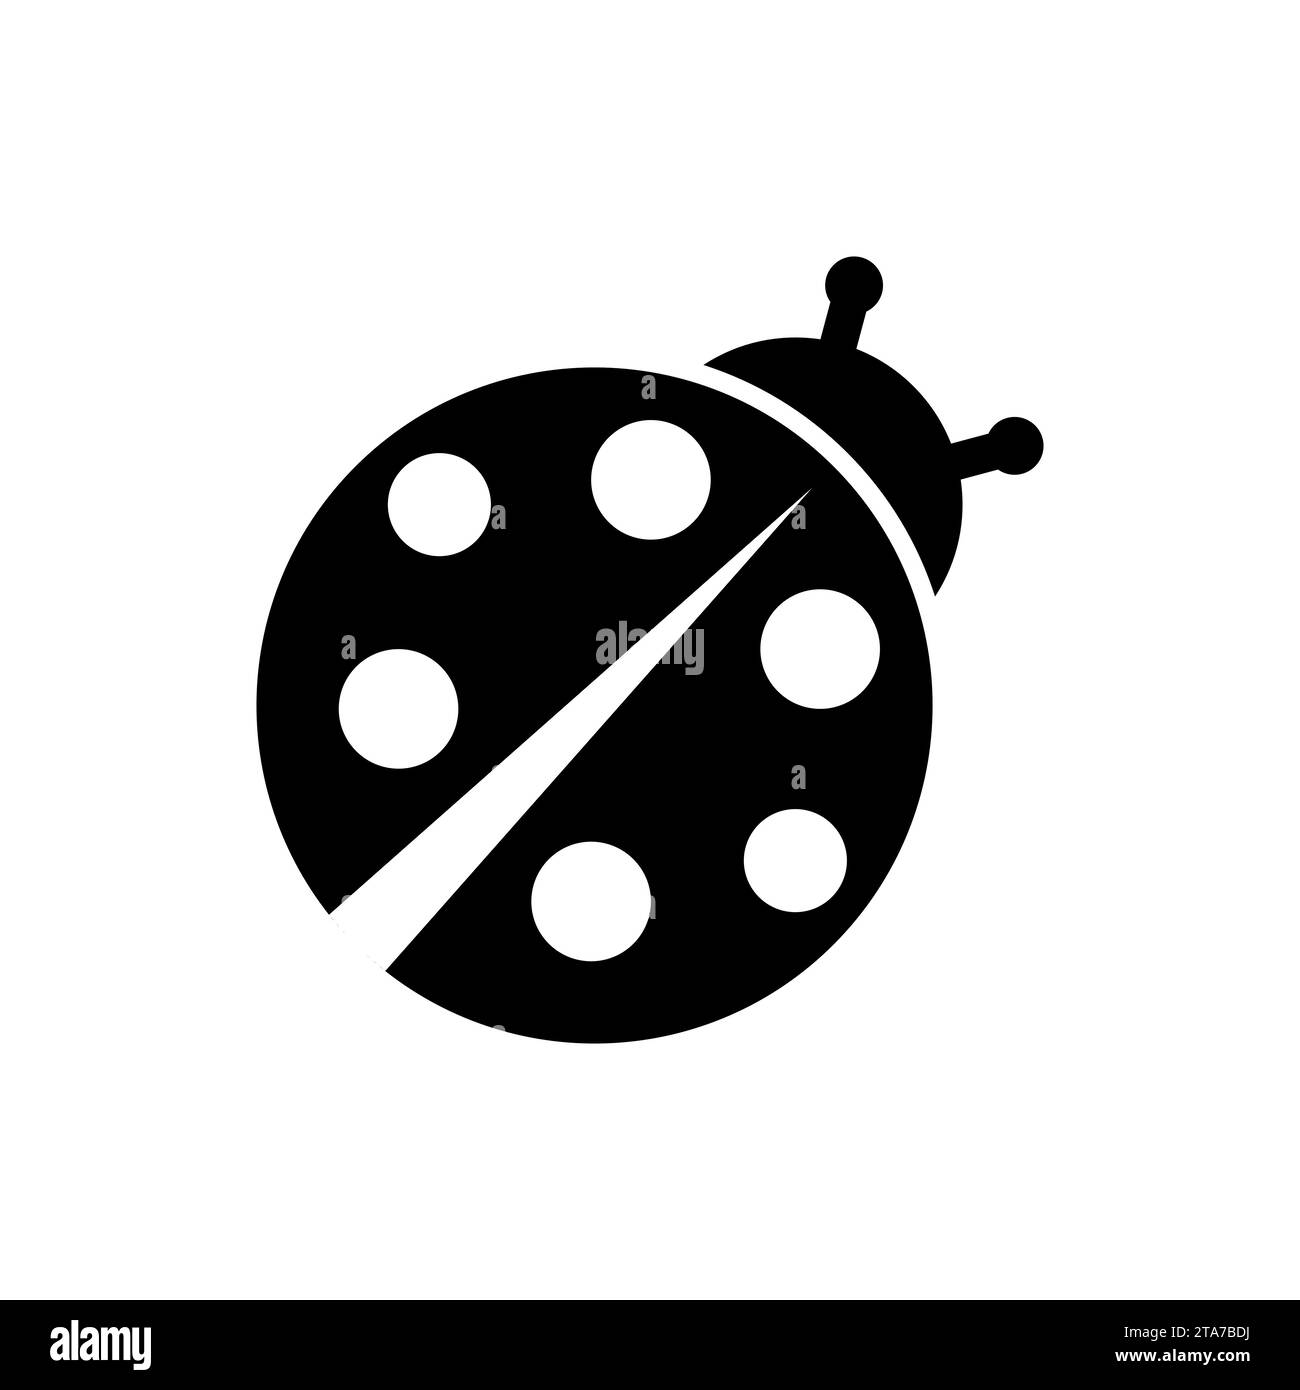 Ladybug icon isolated on white background. Vector illustration. Stock Vector